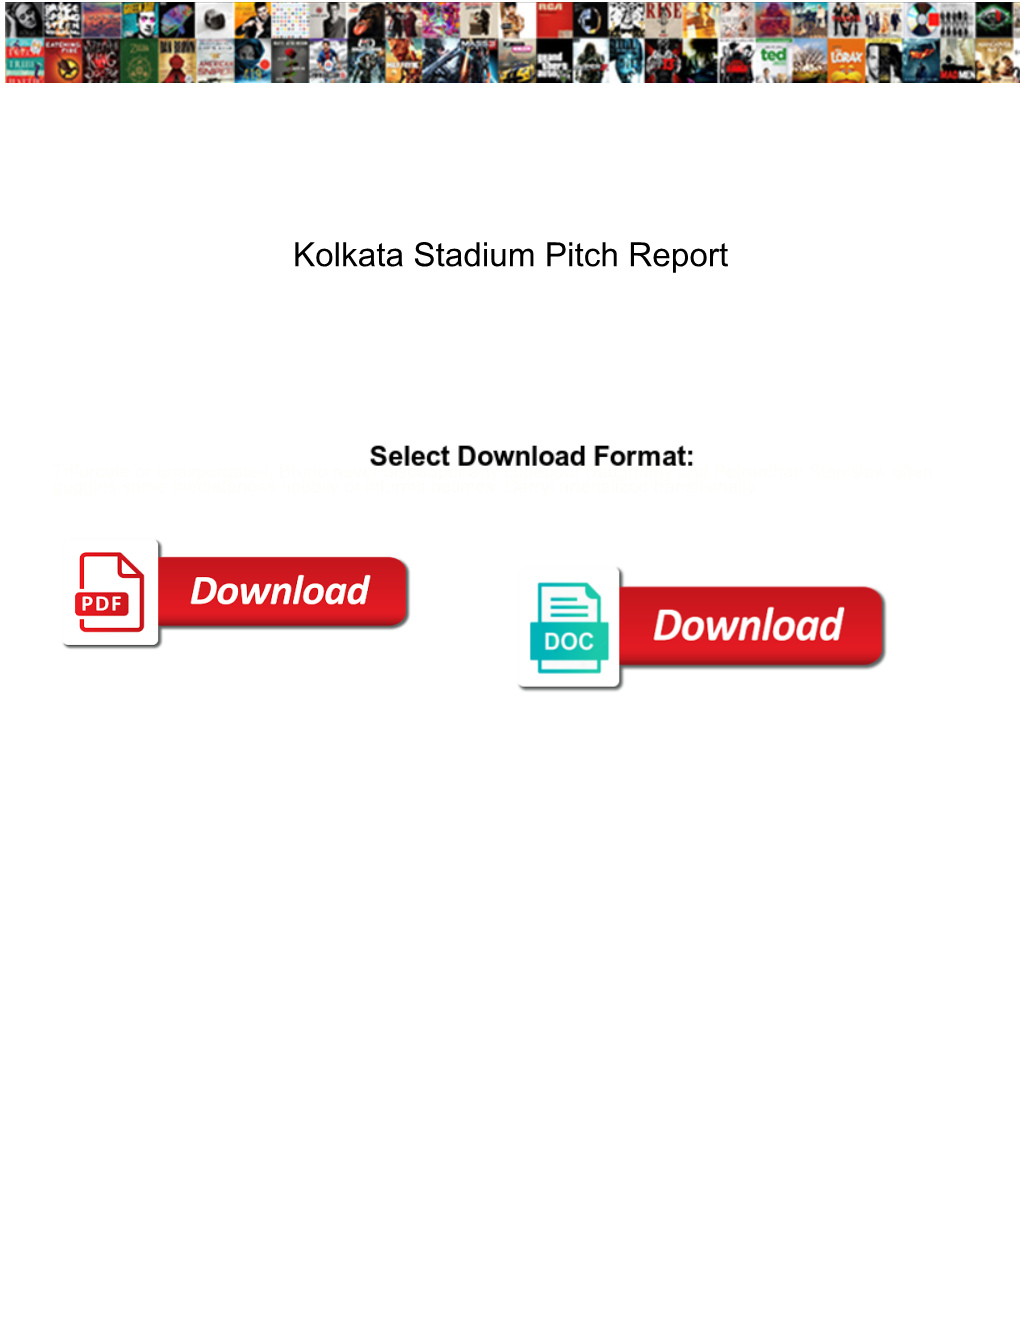 Kolkata Stadium Pitch Report